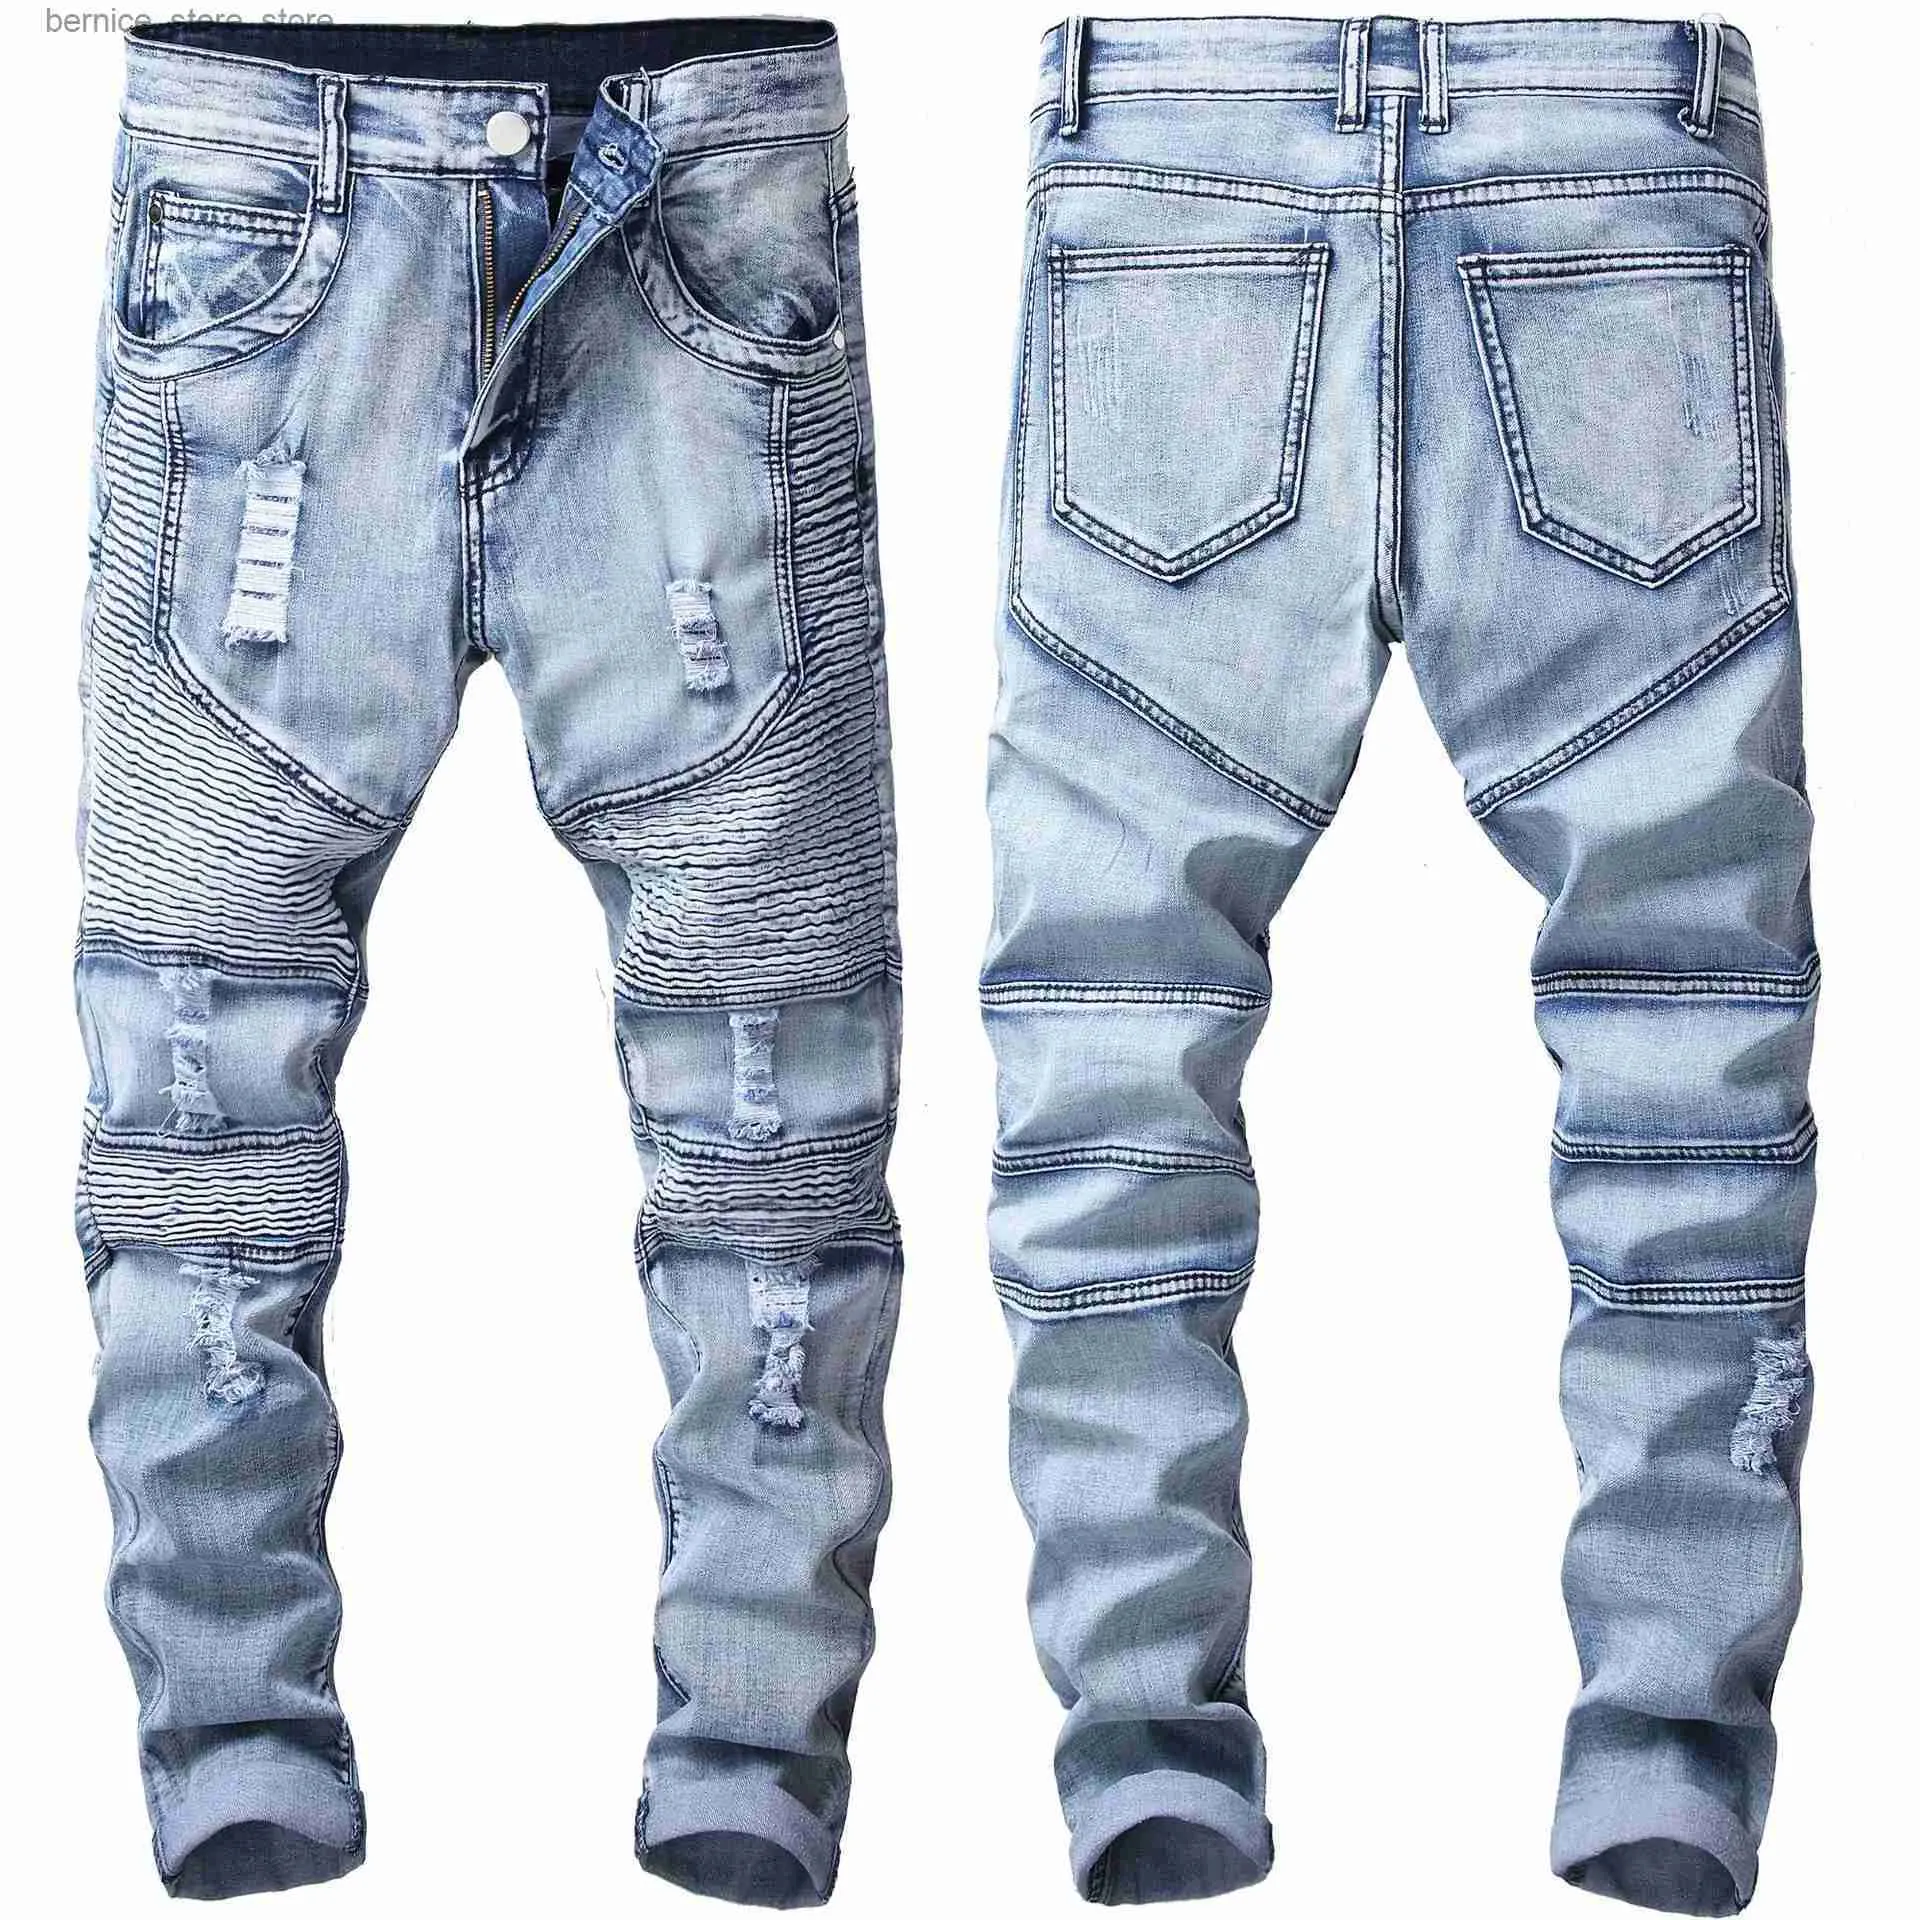 Aggregate 220+ motorcycle denim jeans best